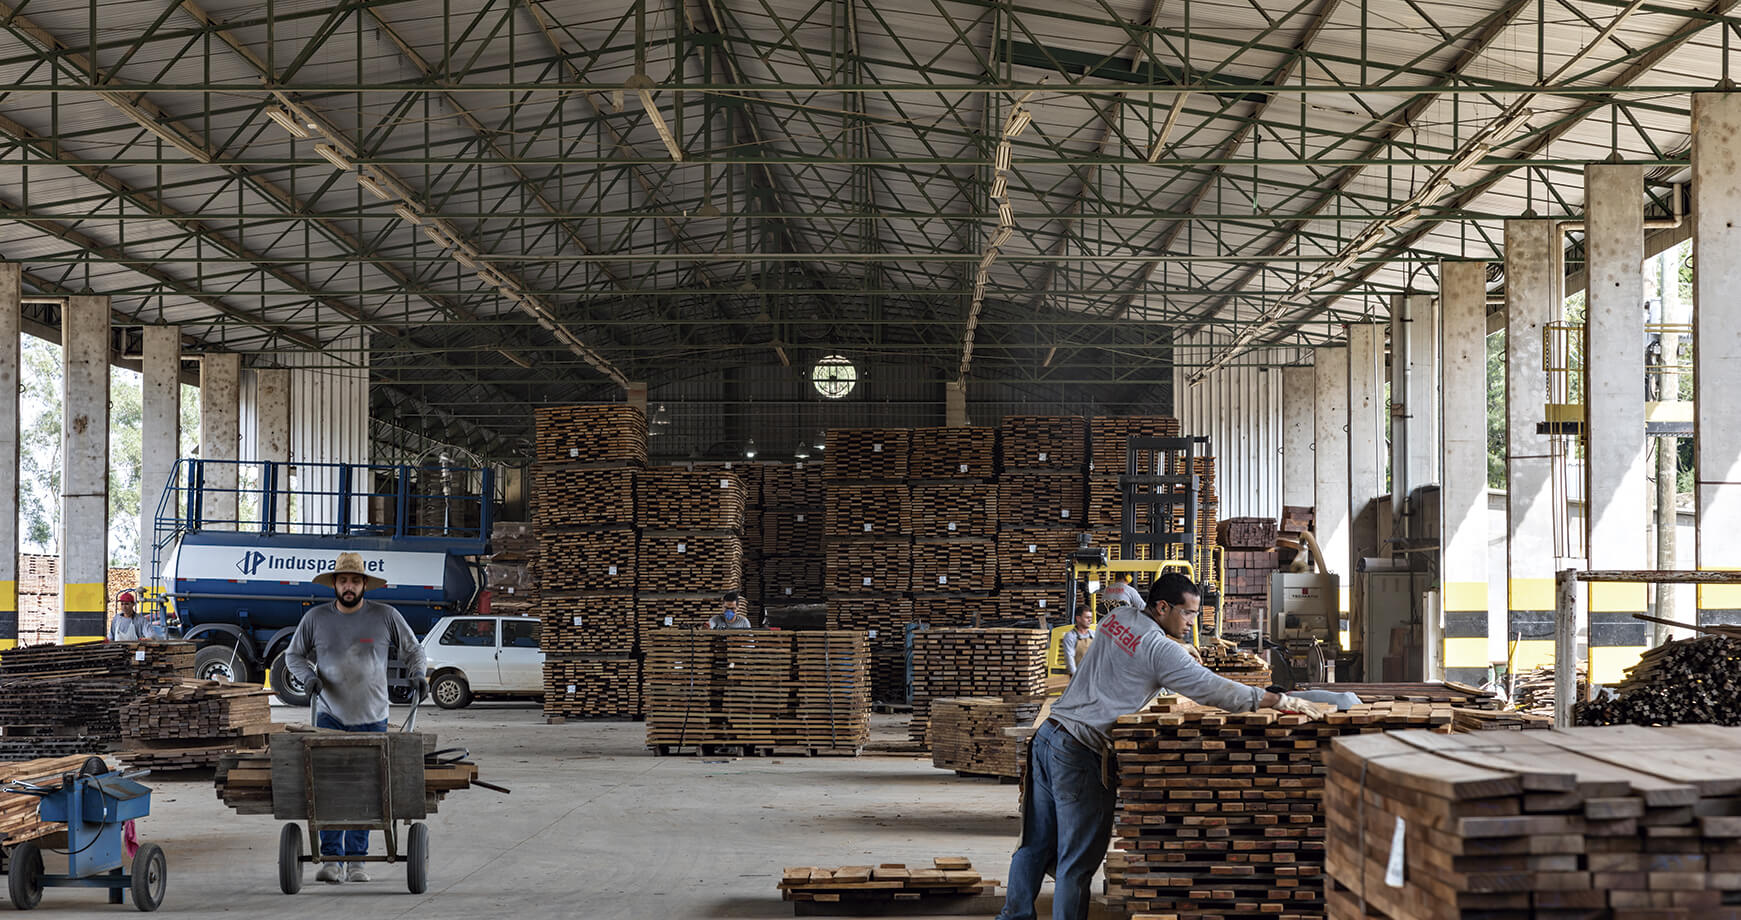 Workers Woorking at Indusparquet's Warehouse